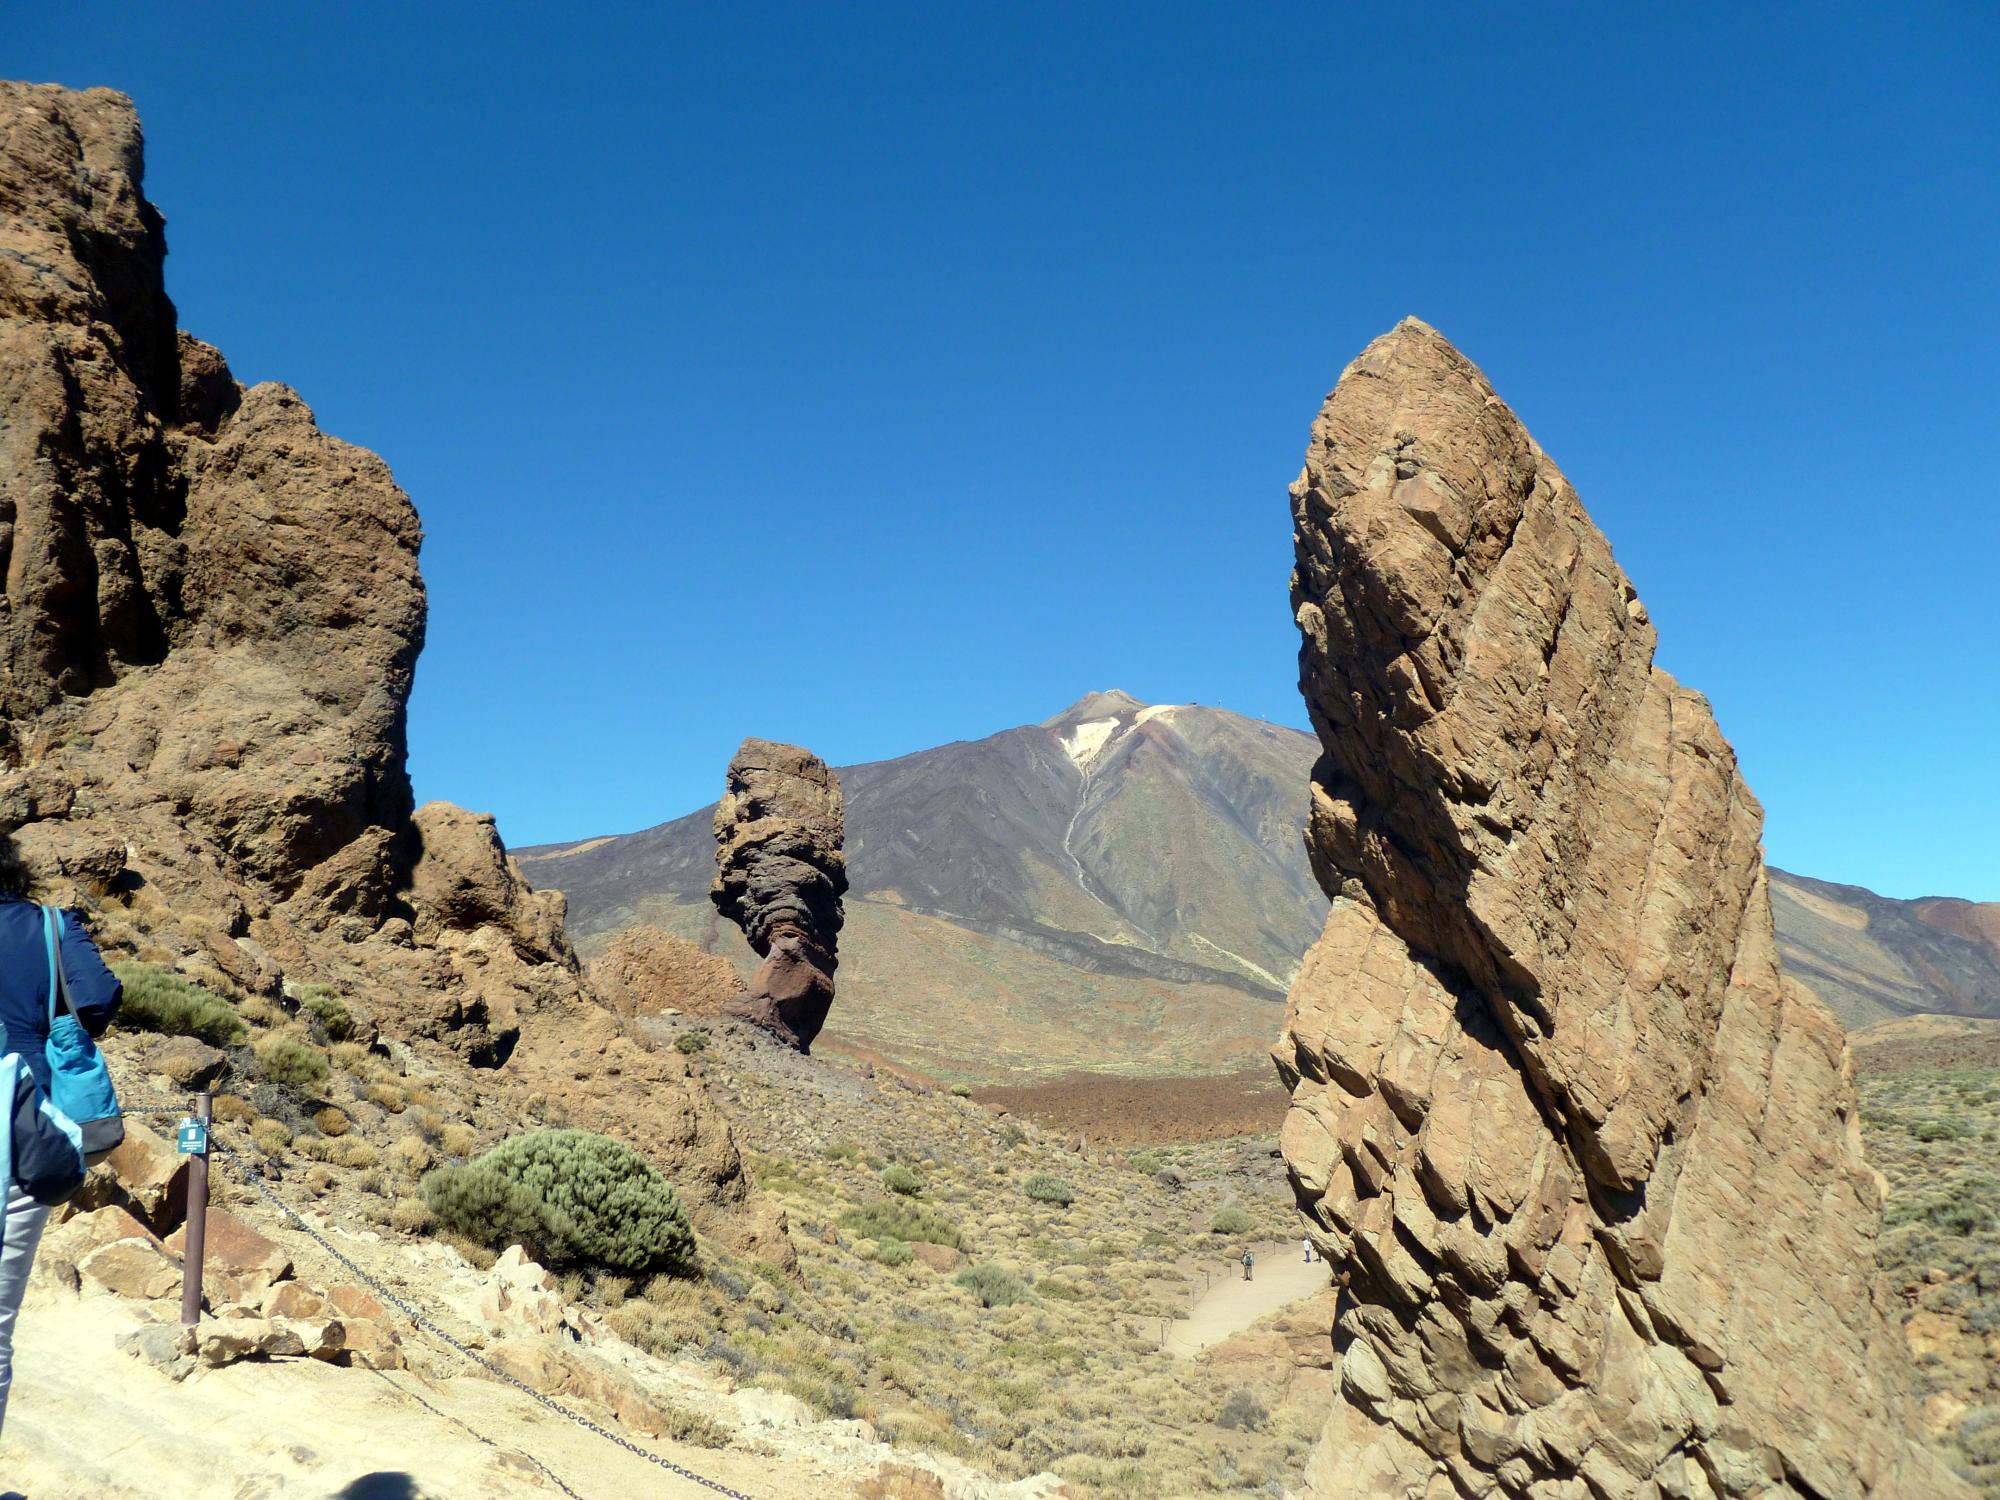  Canary Islands - El Teide National Park #8